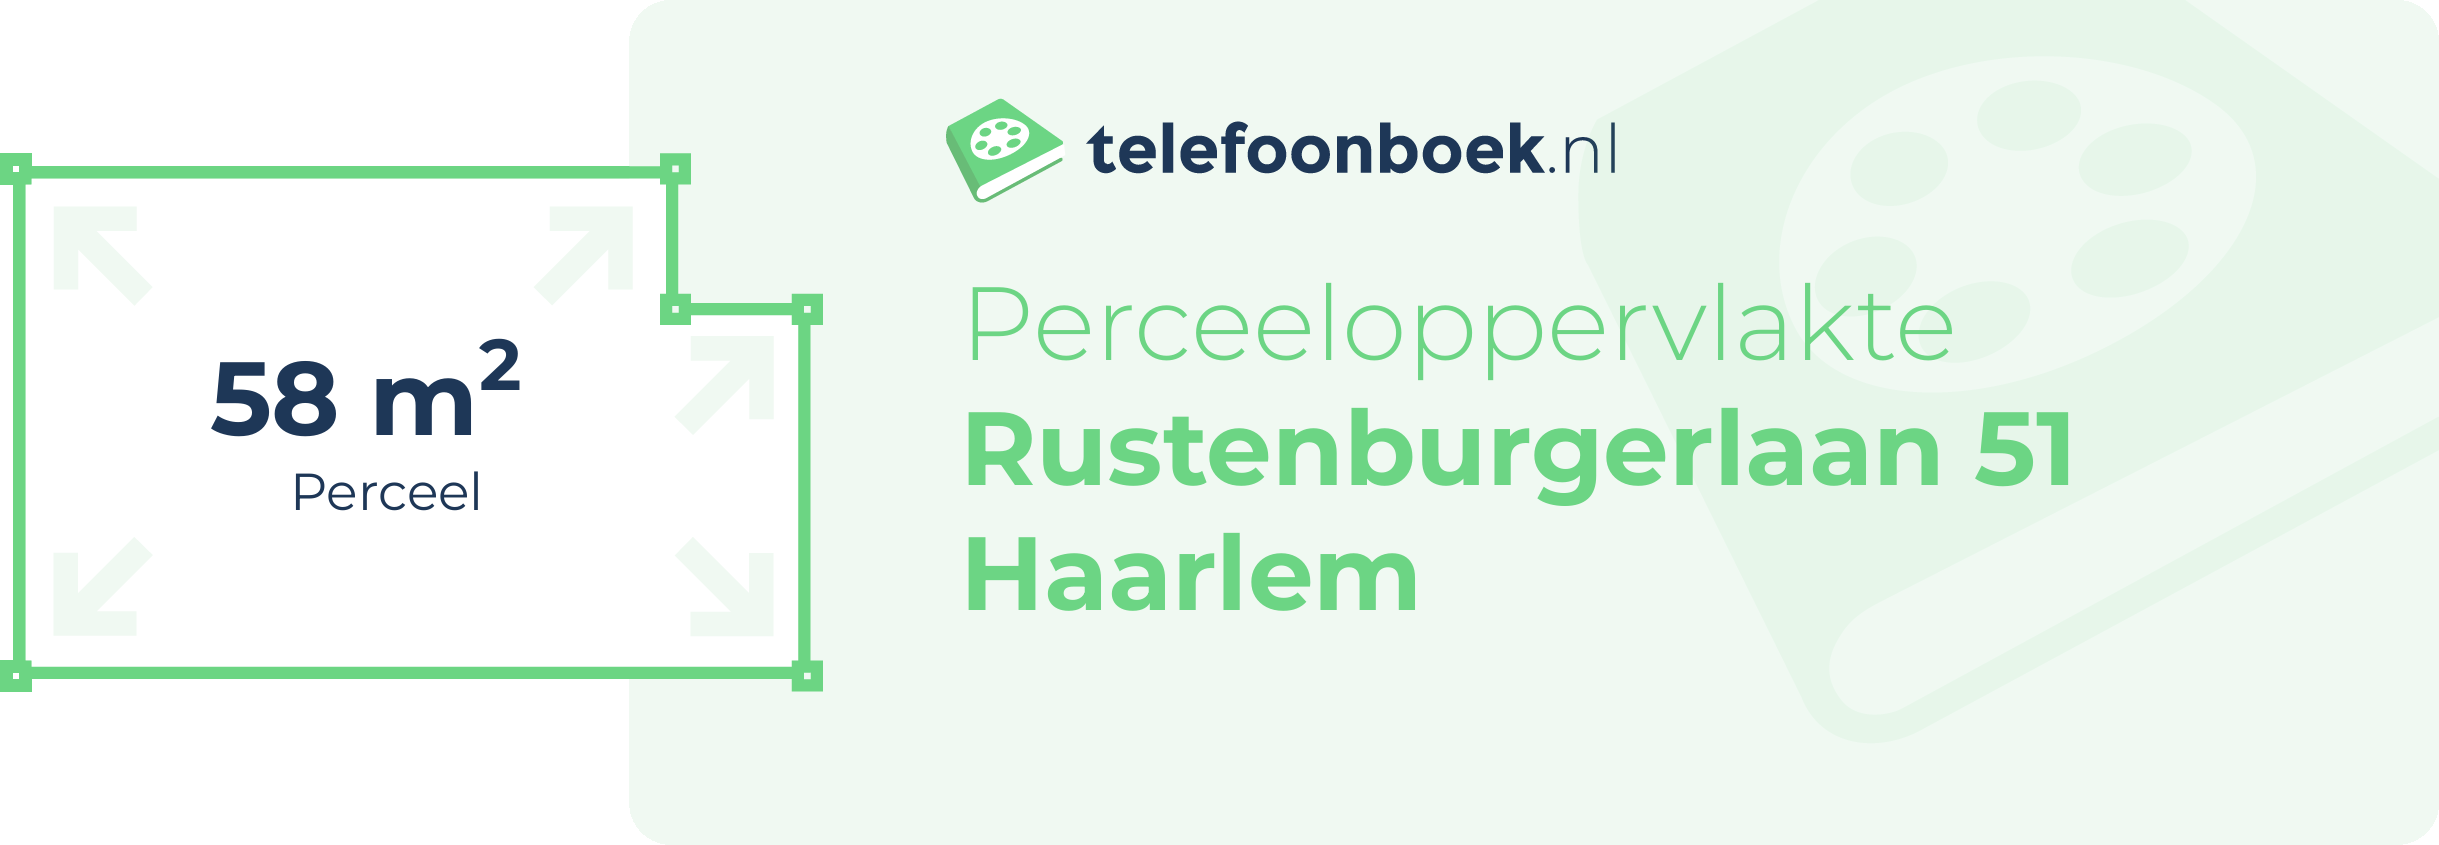 Perceeloppervlakte Rustenburgerlaan 51 Haarlem